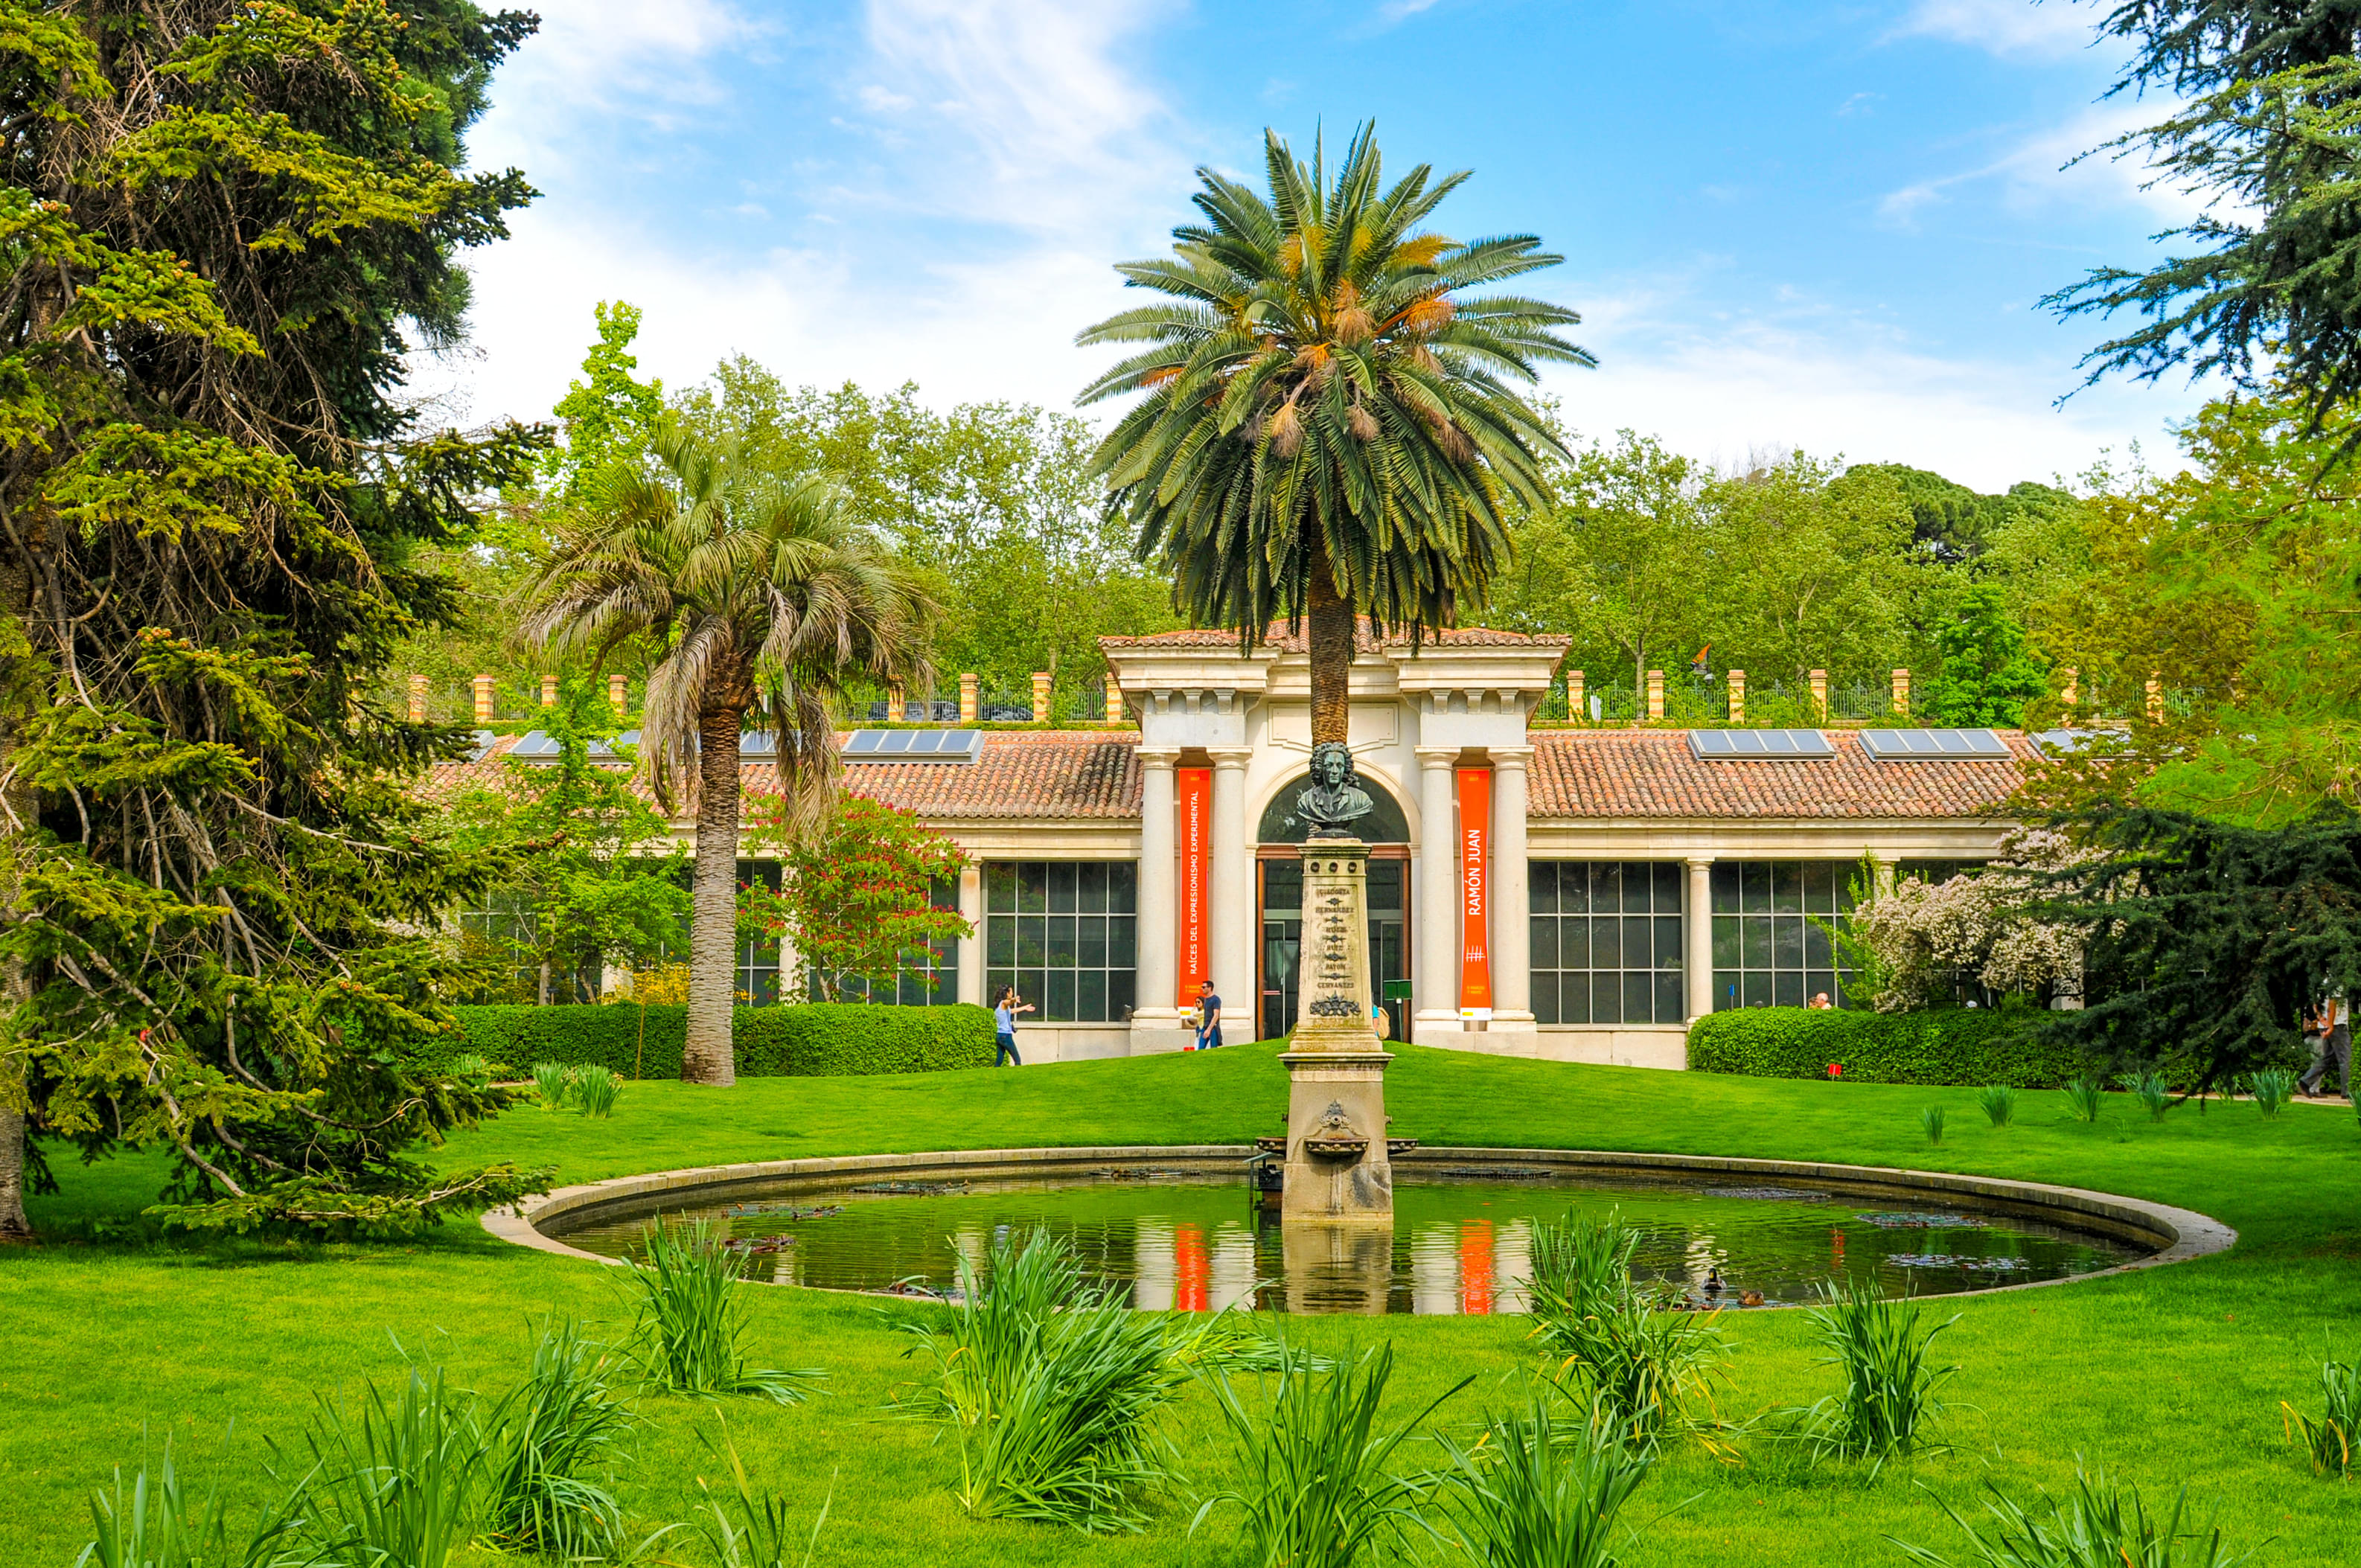 Royal Botanical Garden Near Royal Palace of Madrid